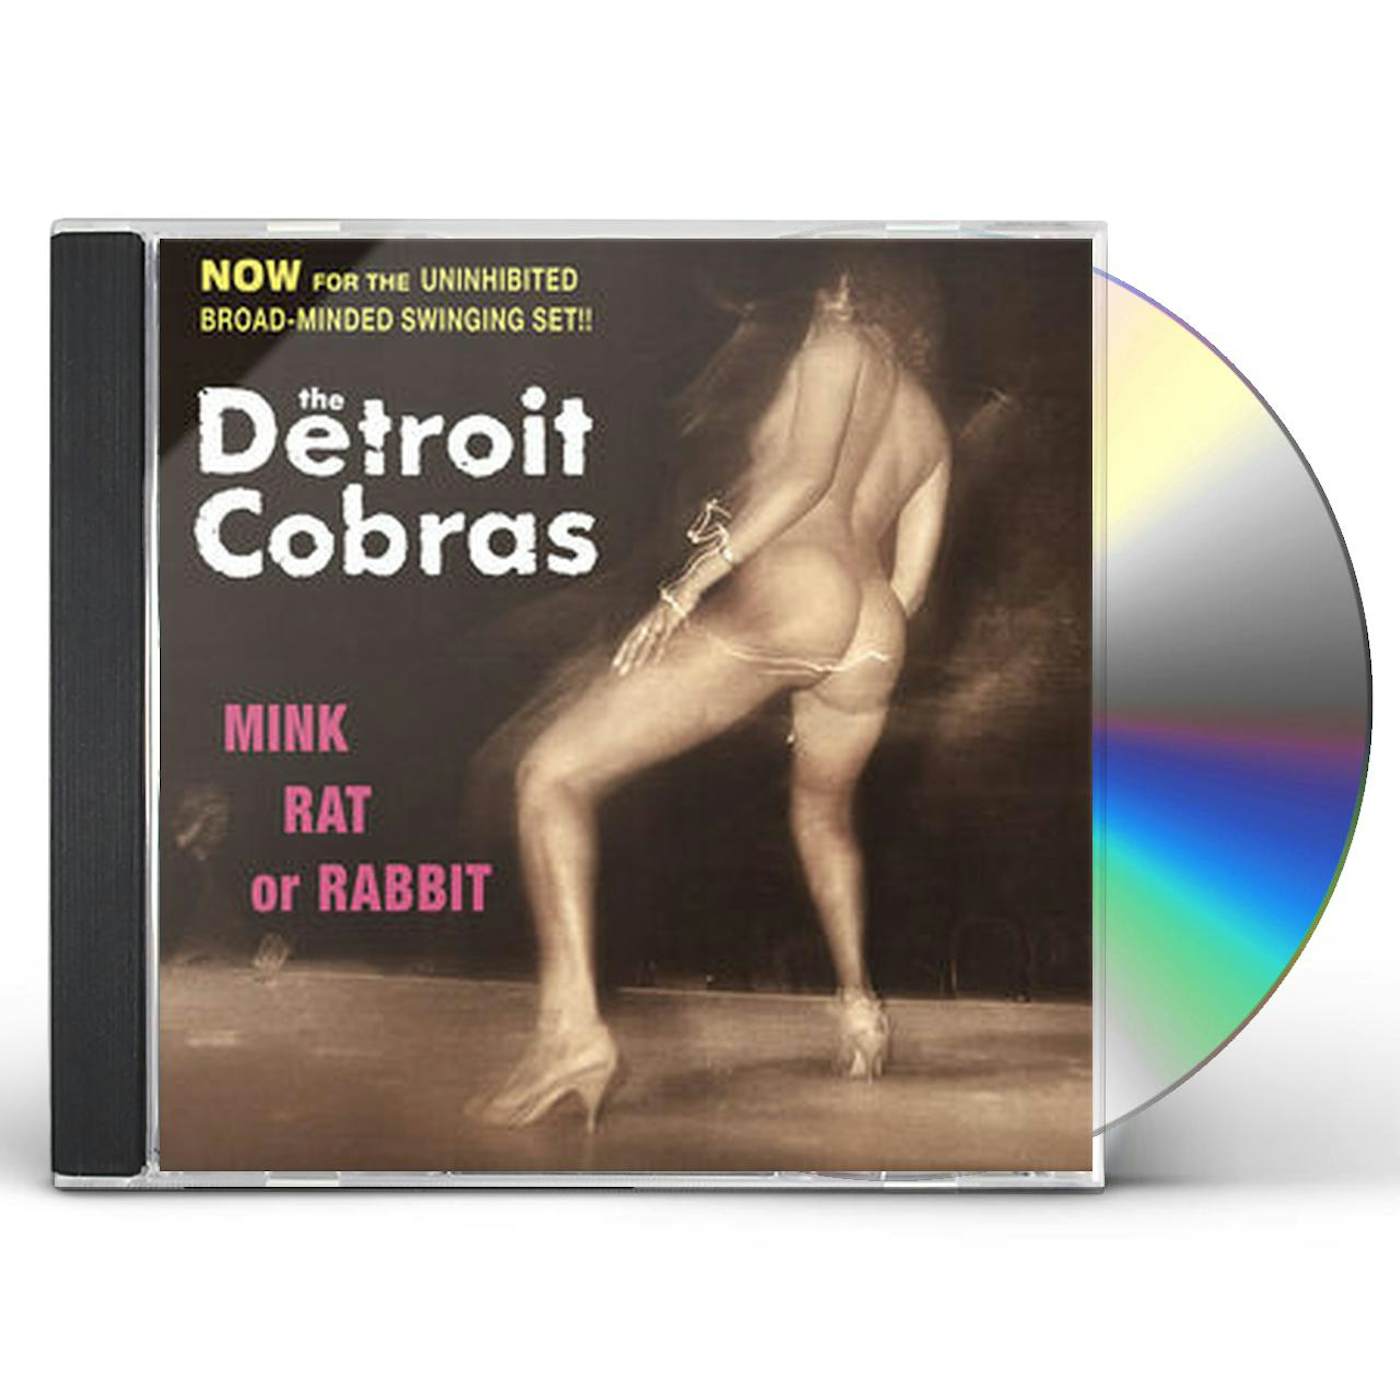 The Detroit Cobras MINK RAT OR RABBIT CD